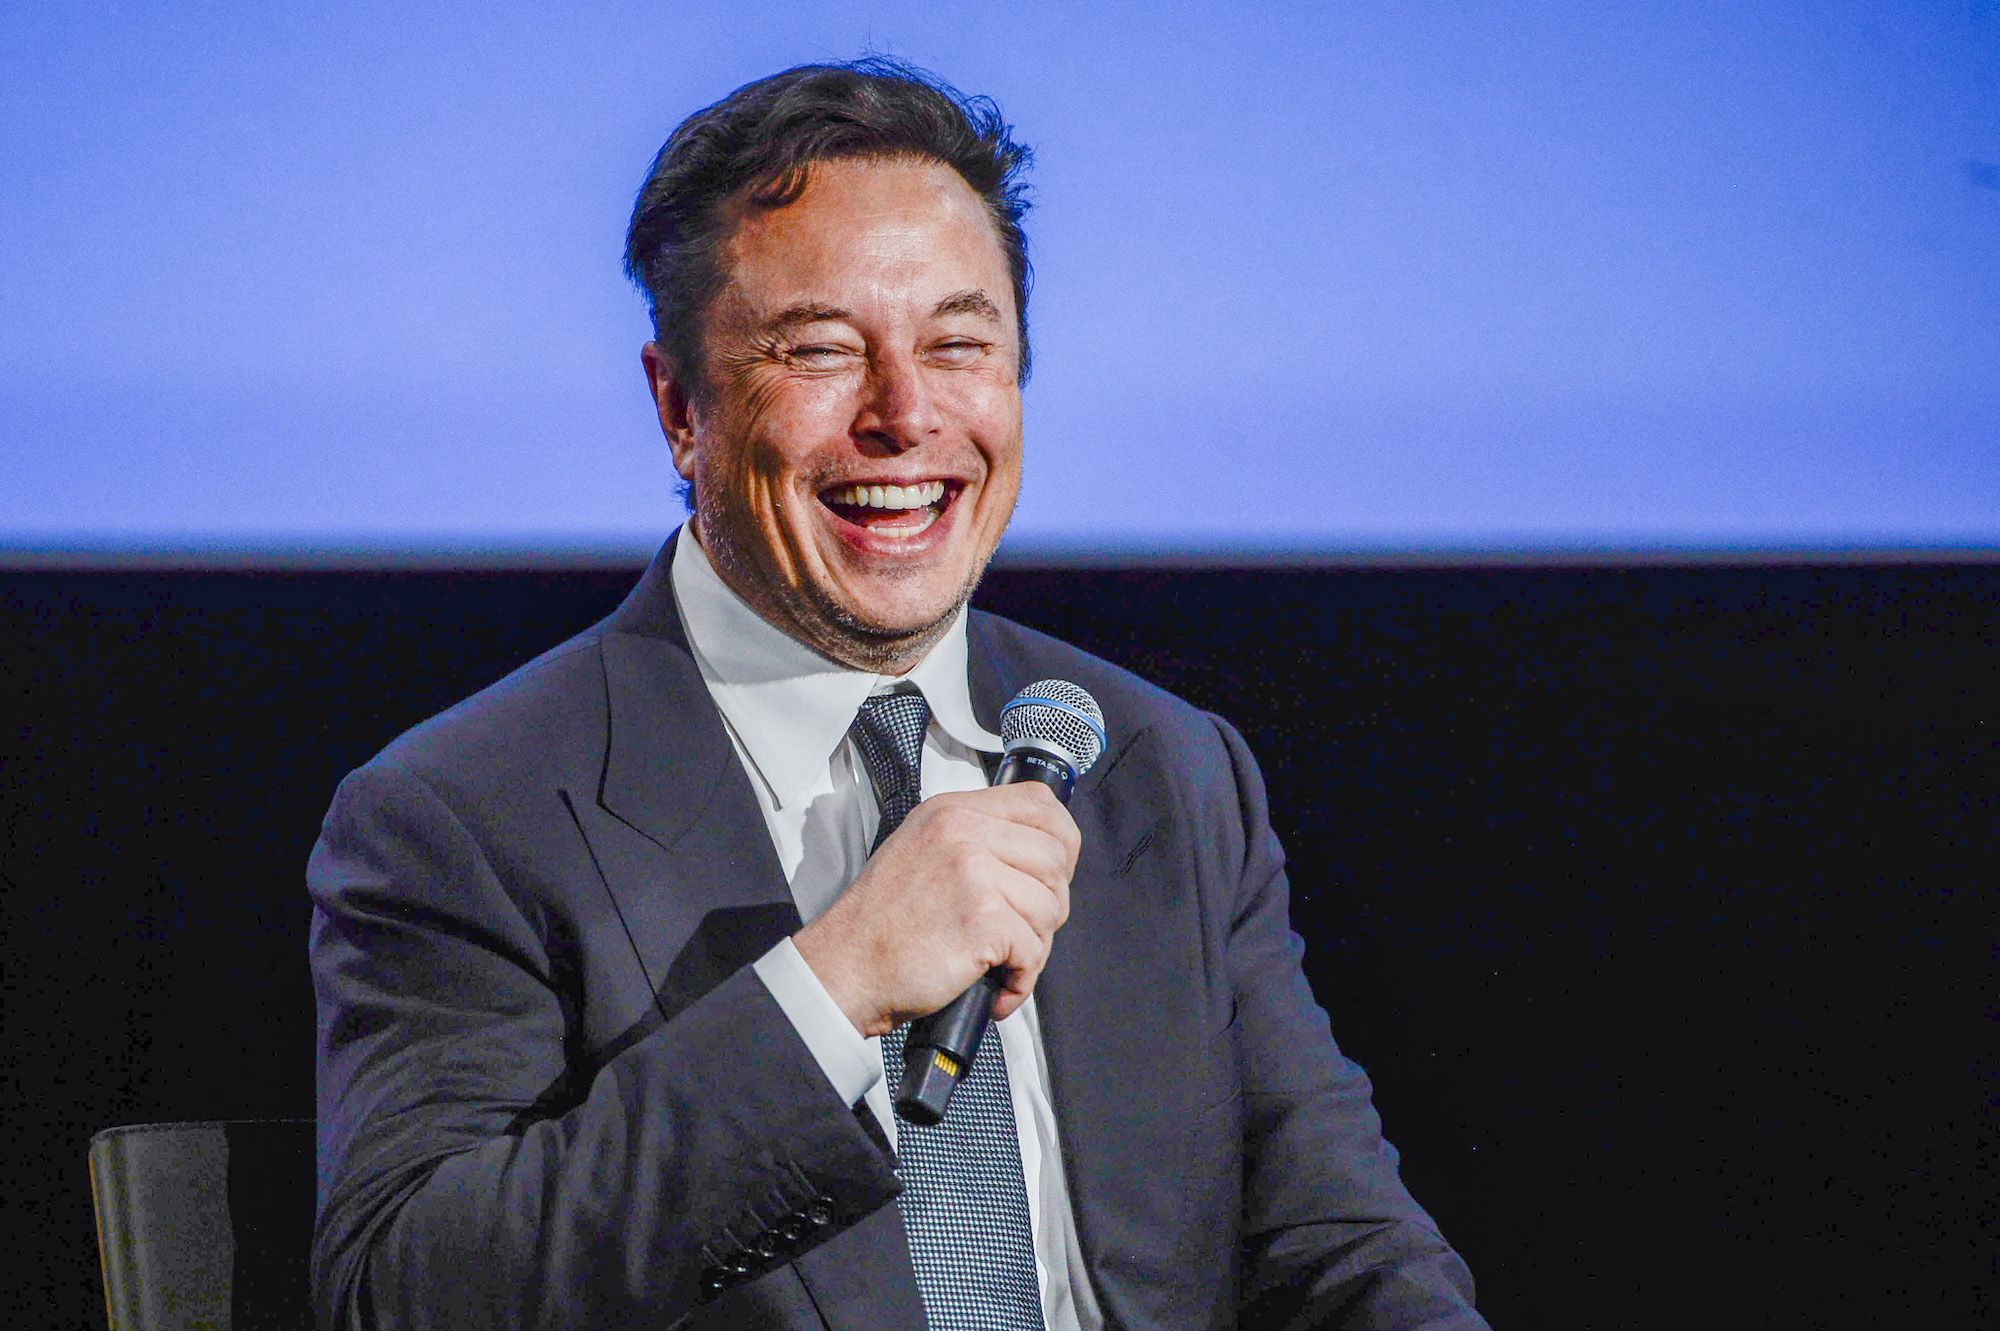 Elon Musk Interview photo photo